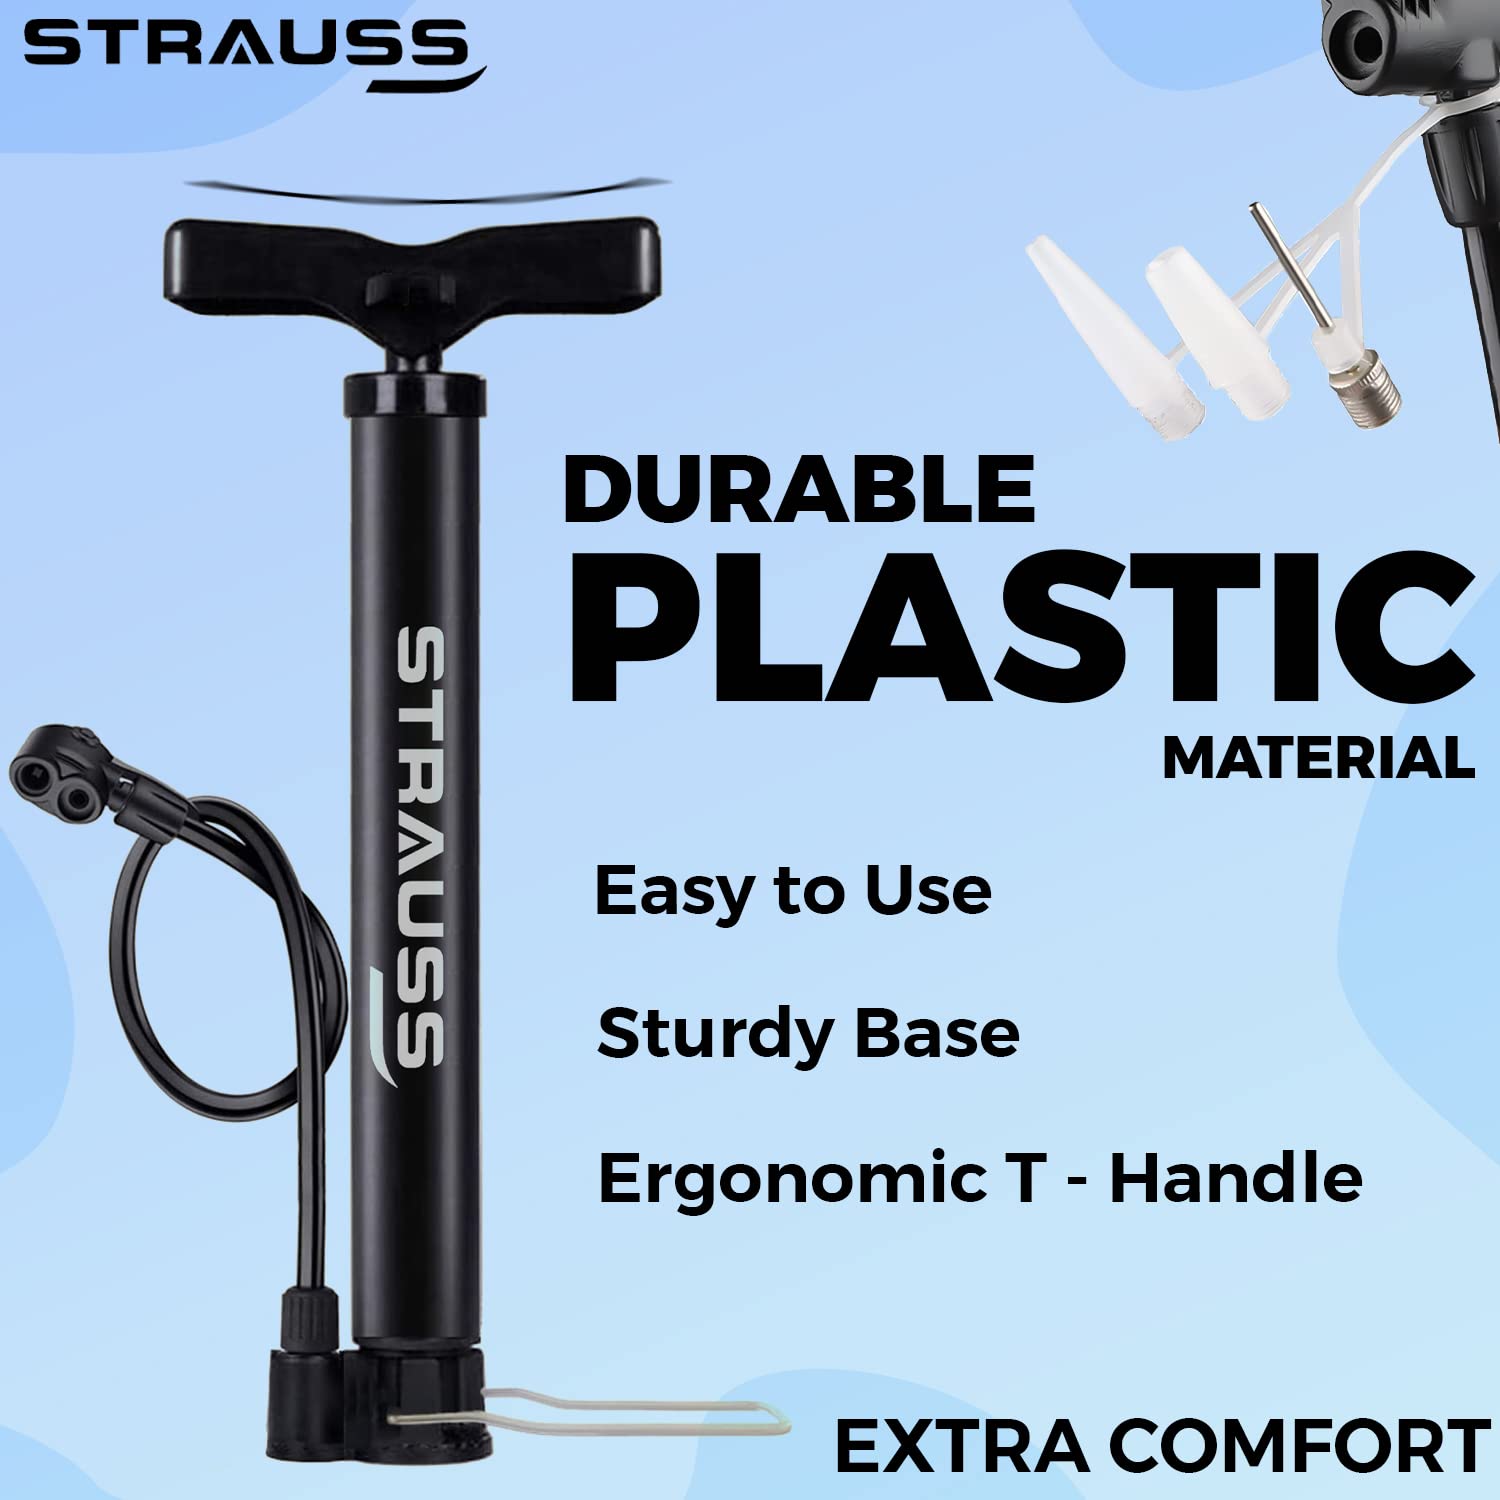 Strauss High Pressure Multipurpose Air Pump | Inflatable Air Pump | Floor Air Pumps for Bicycle, Car, Ball, Motorcycle,(Black)